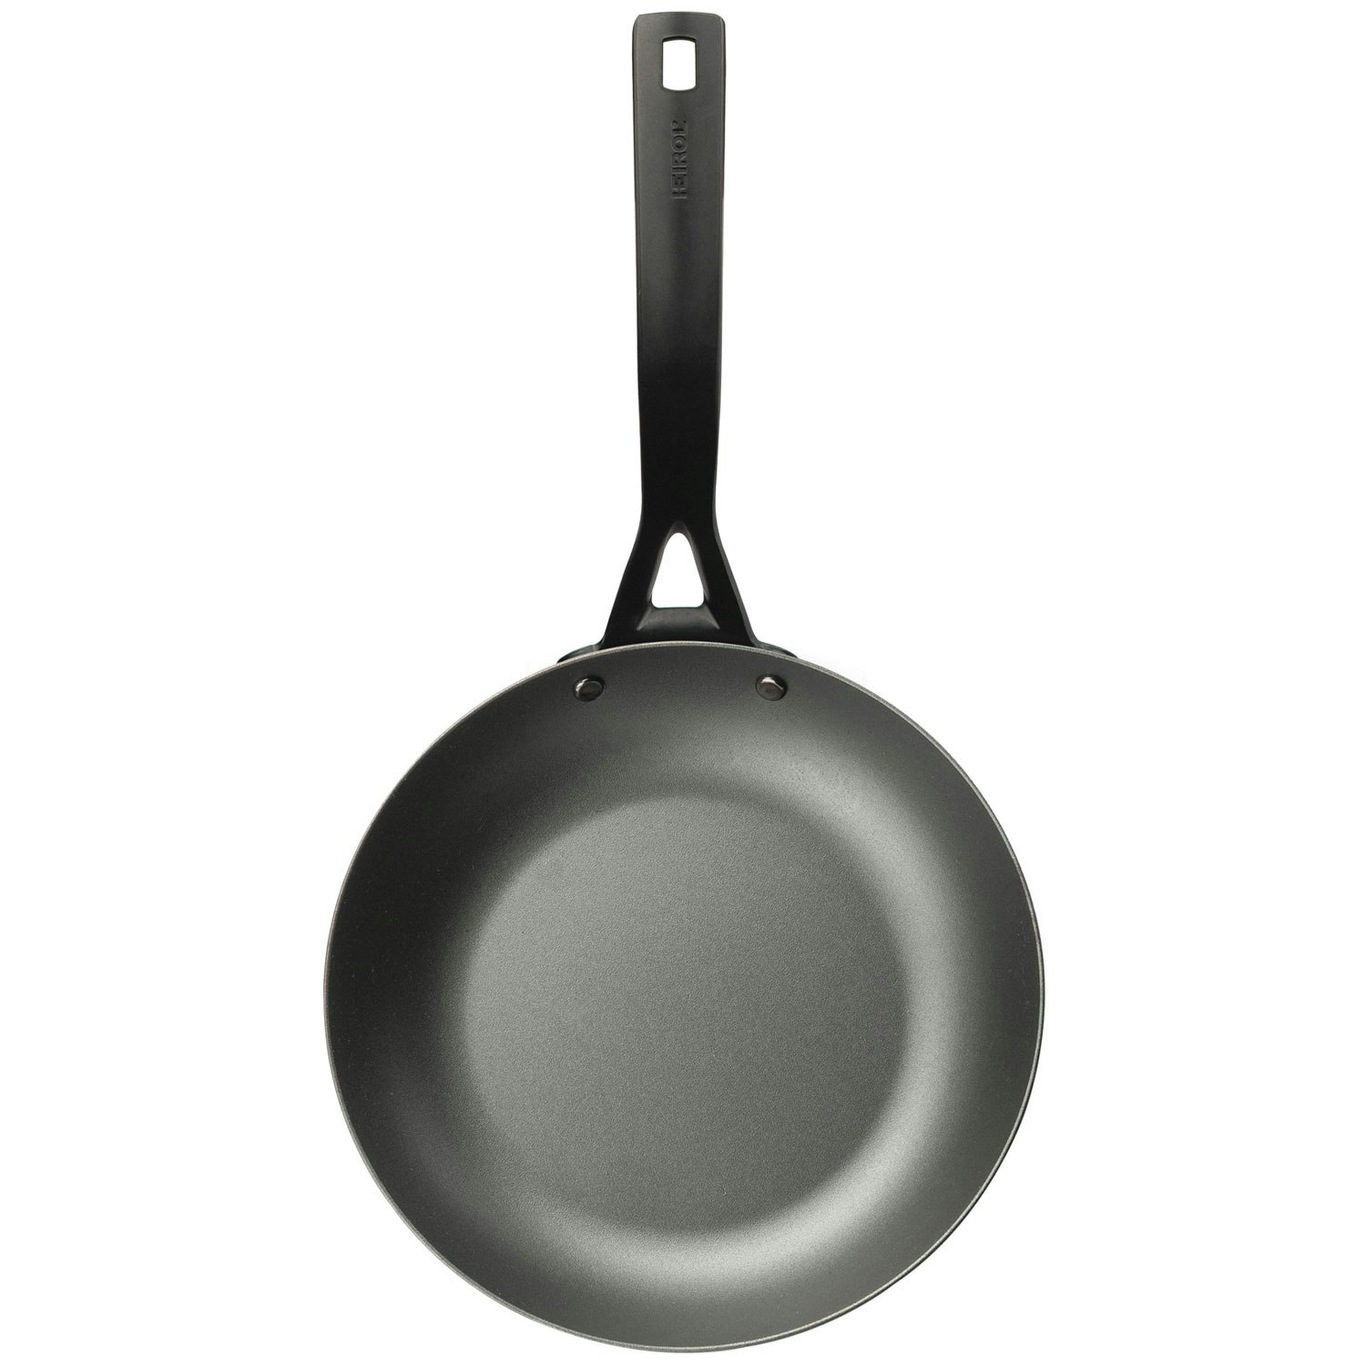 Blacksteel Pro Frying Pan, 24 cm